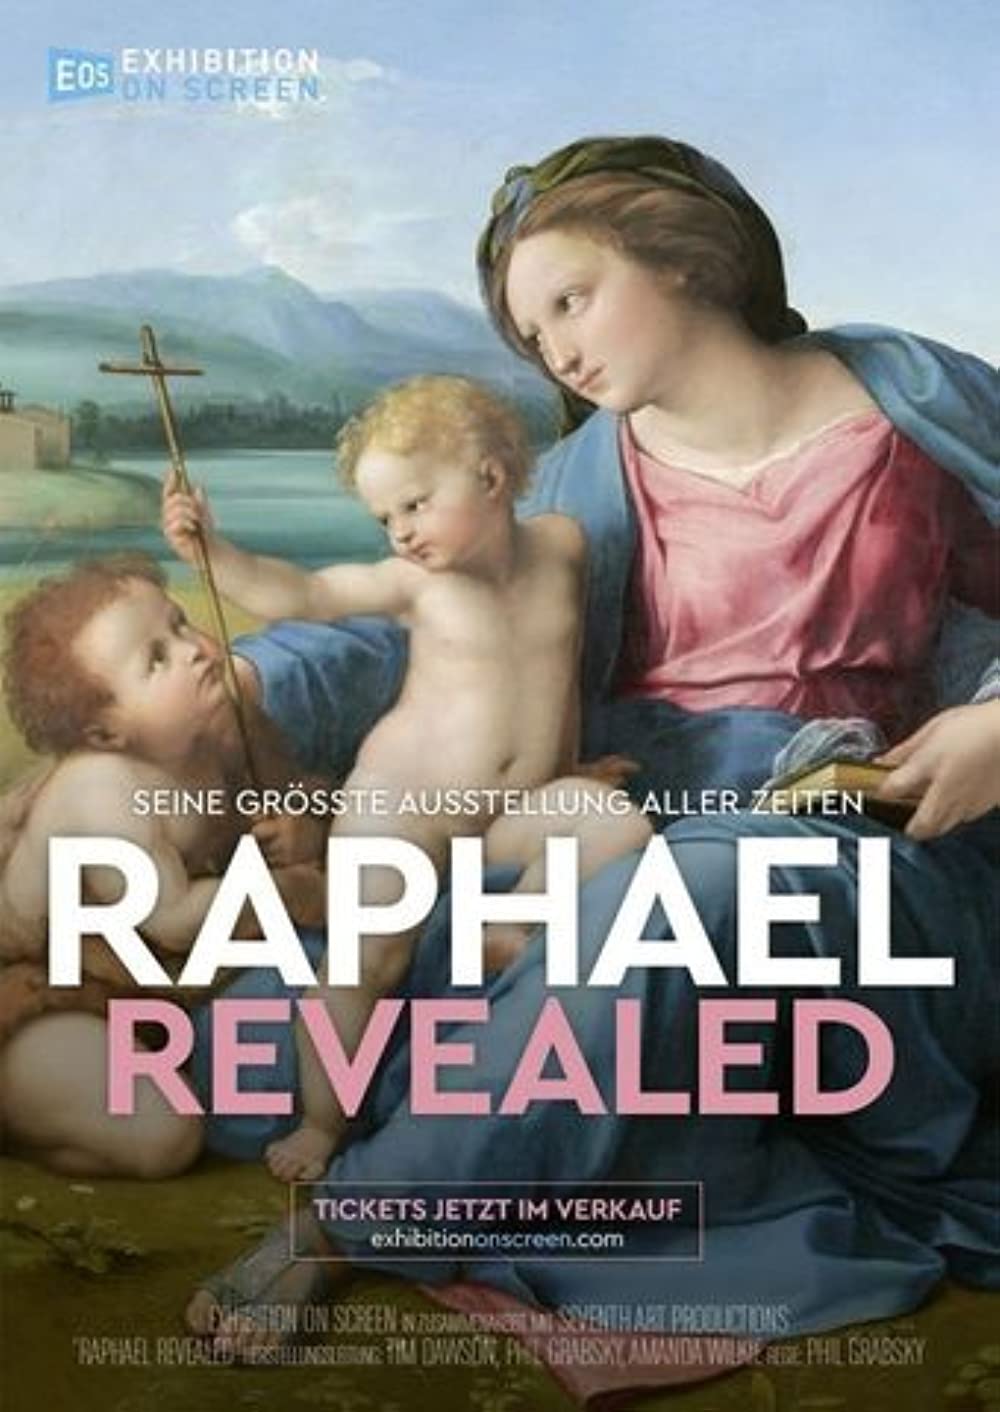 Exhibition on Screen: Raphael Revealed (OV)